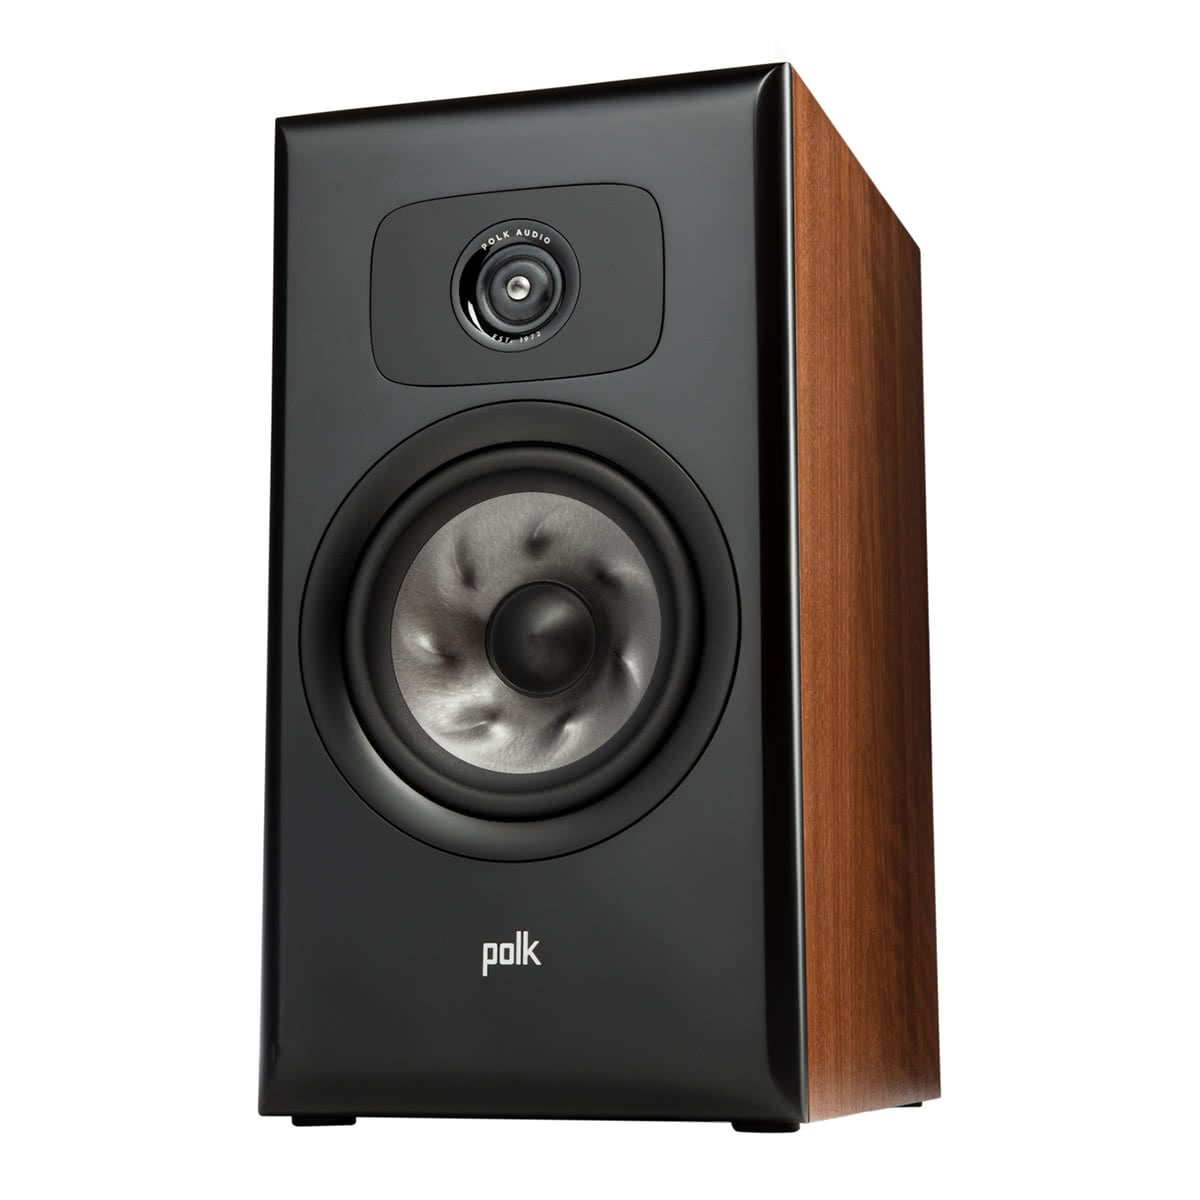 Polk Audio Legend L200 Bookshelf Speakers (Brown) - Pair